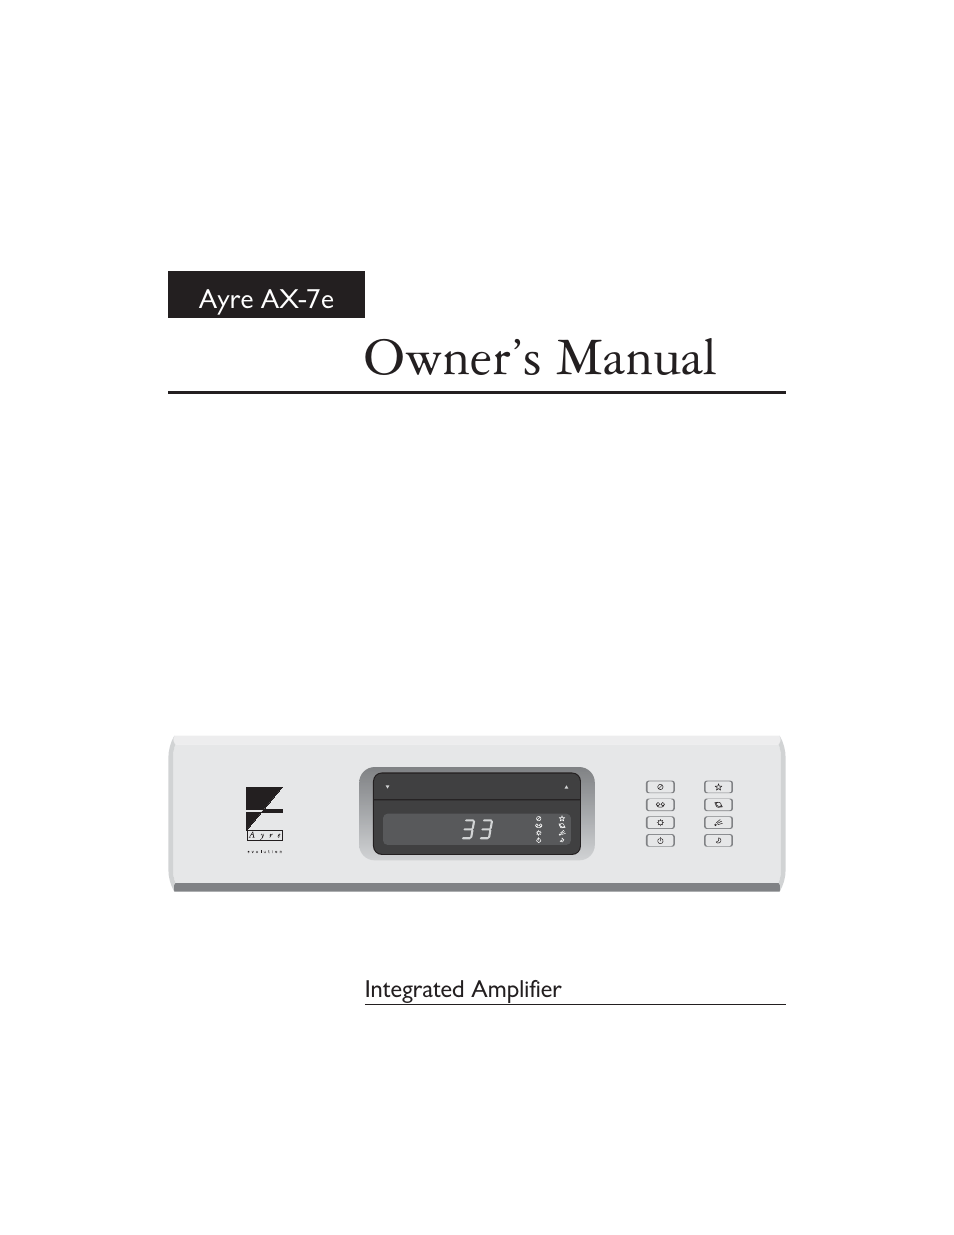 Ax-7e Integrated Amplifier User Manual - Norman Audio